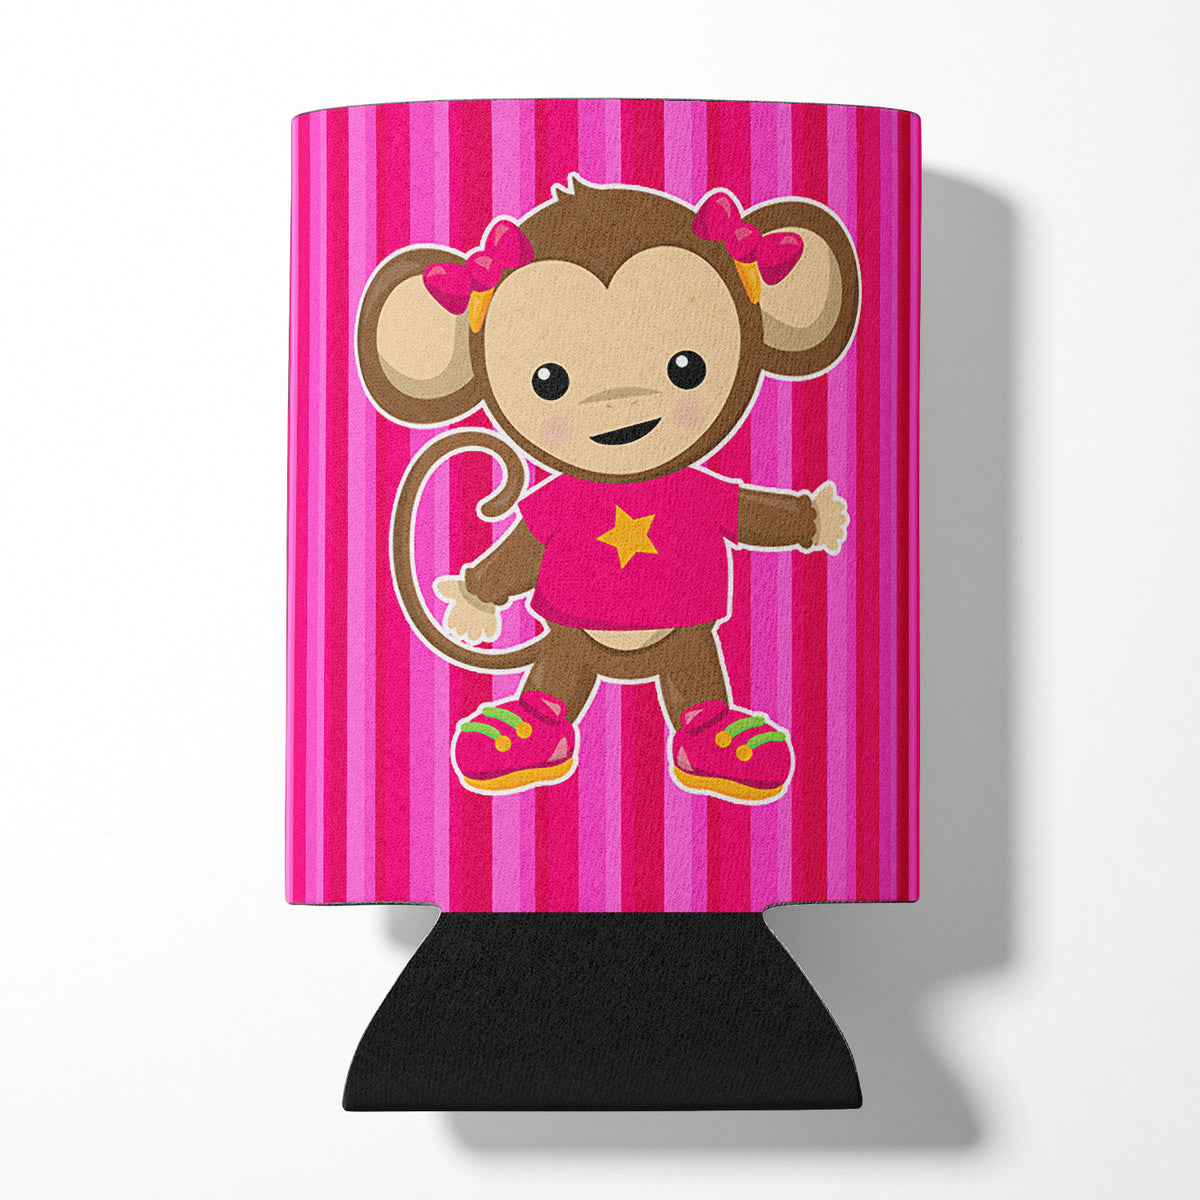 Monkey on Pink Stripes Can or Bottle Hugger BB7020CC